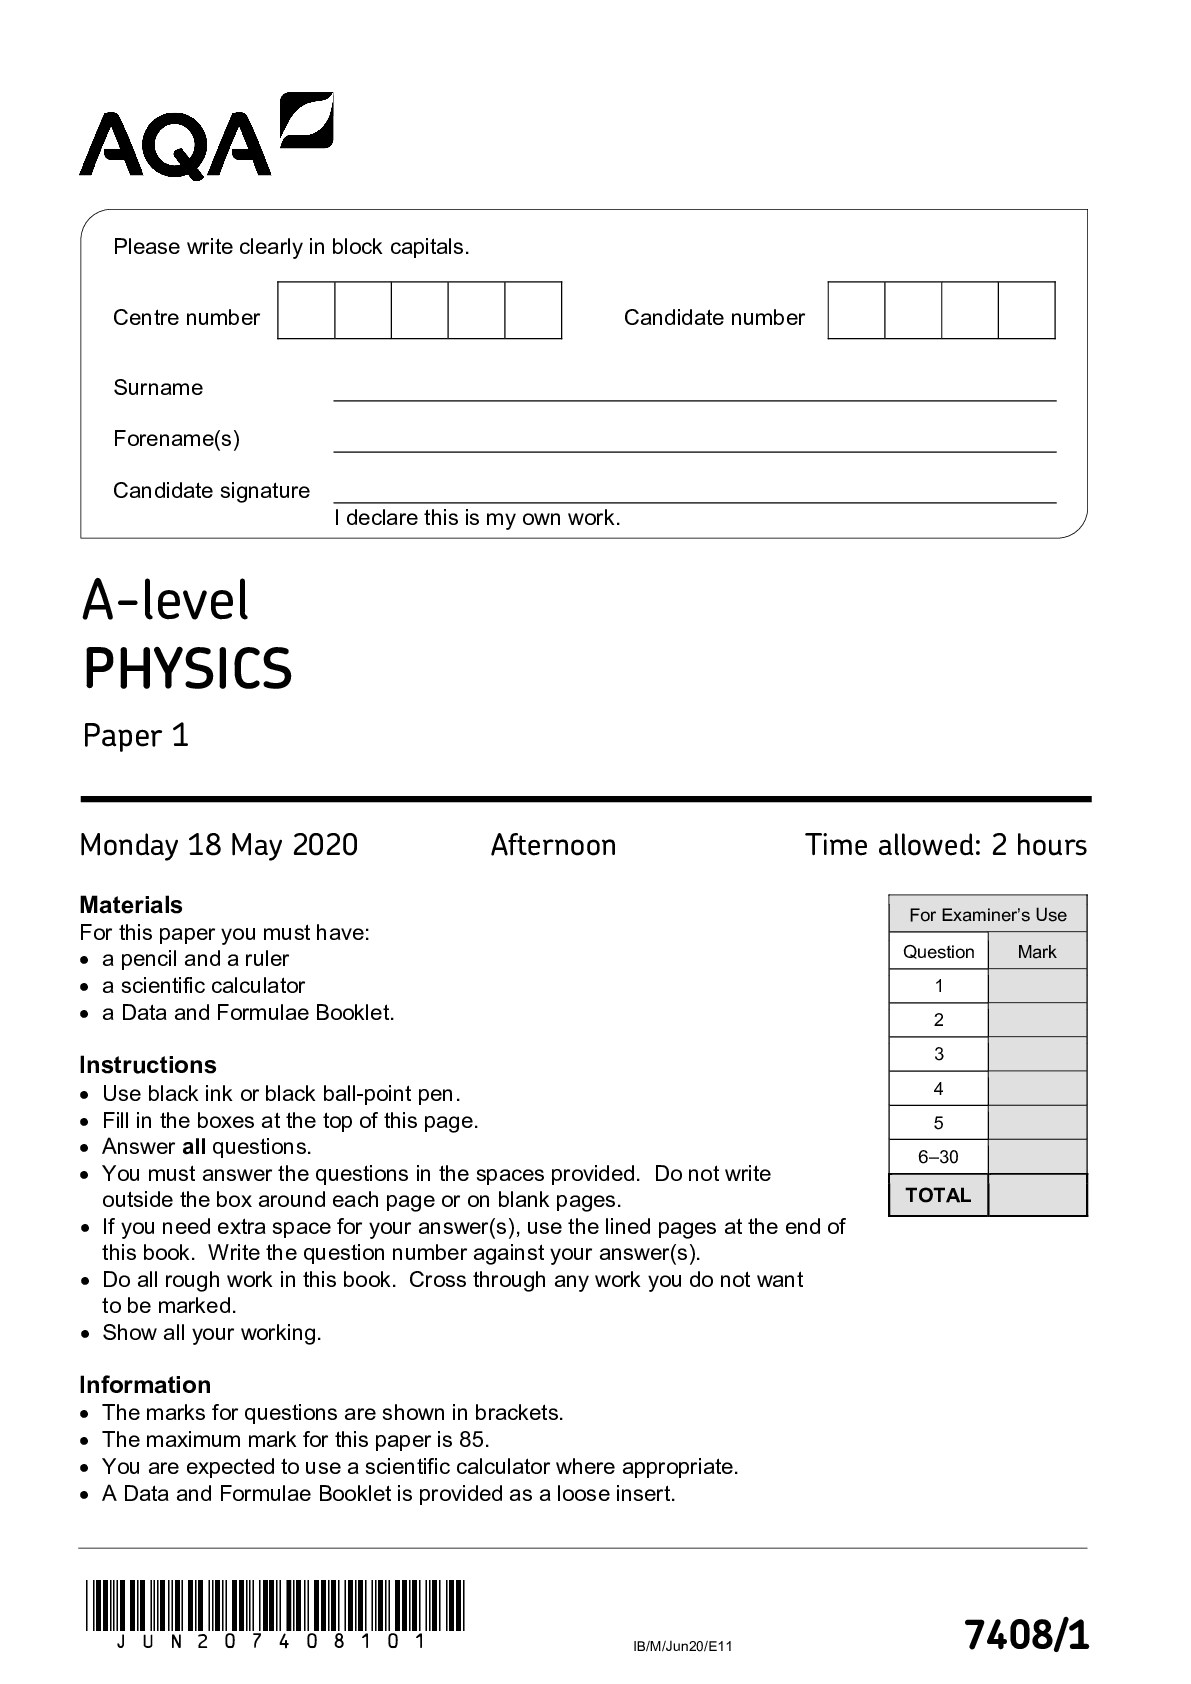 A-level PHYSICS Paper 1, questions